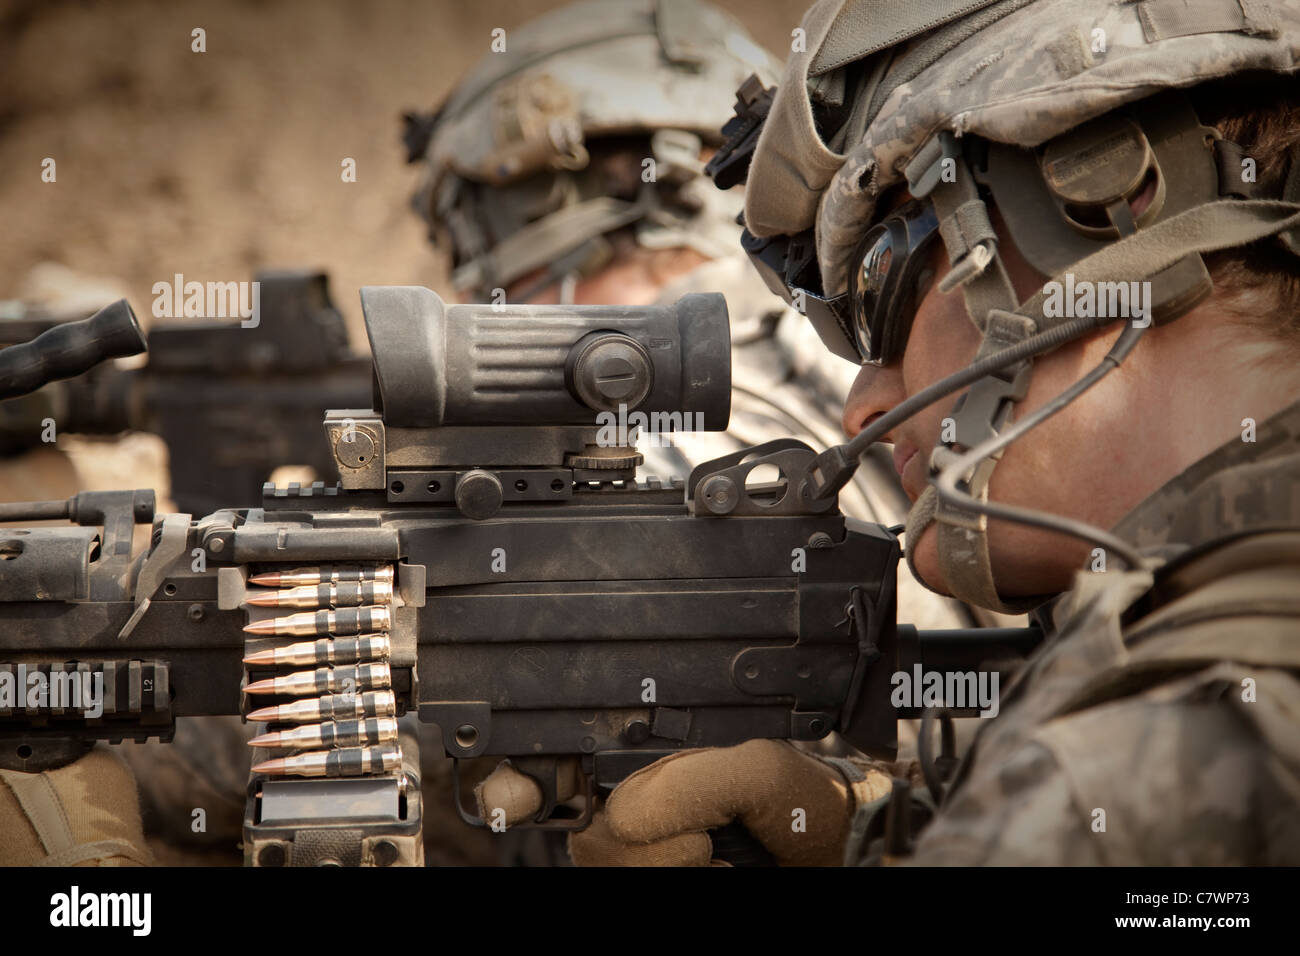 US Army Rangers in Afghanistan bekämpfen Szene. Stockfoto